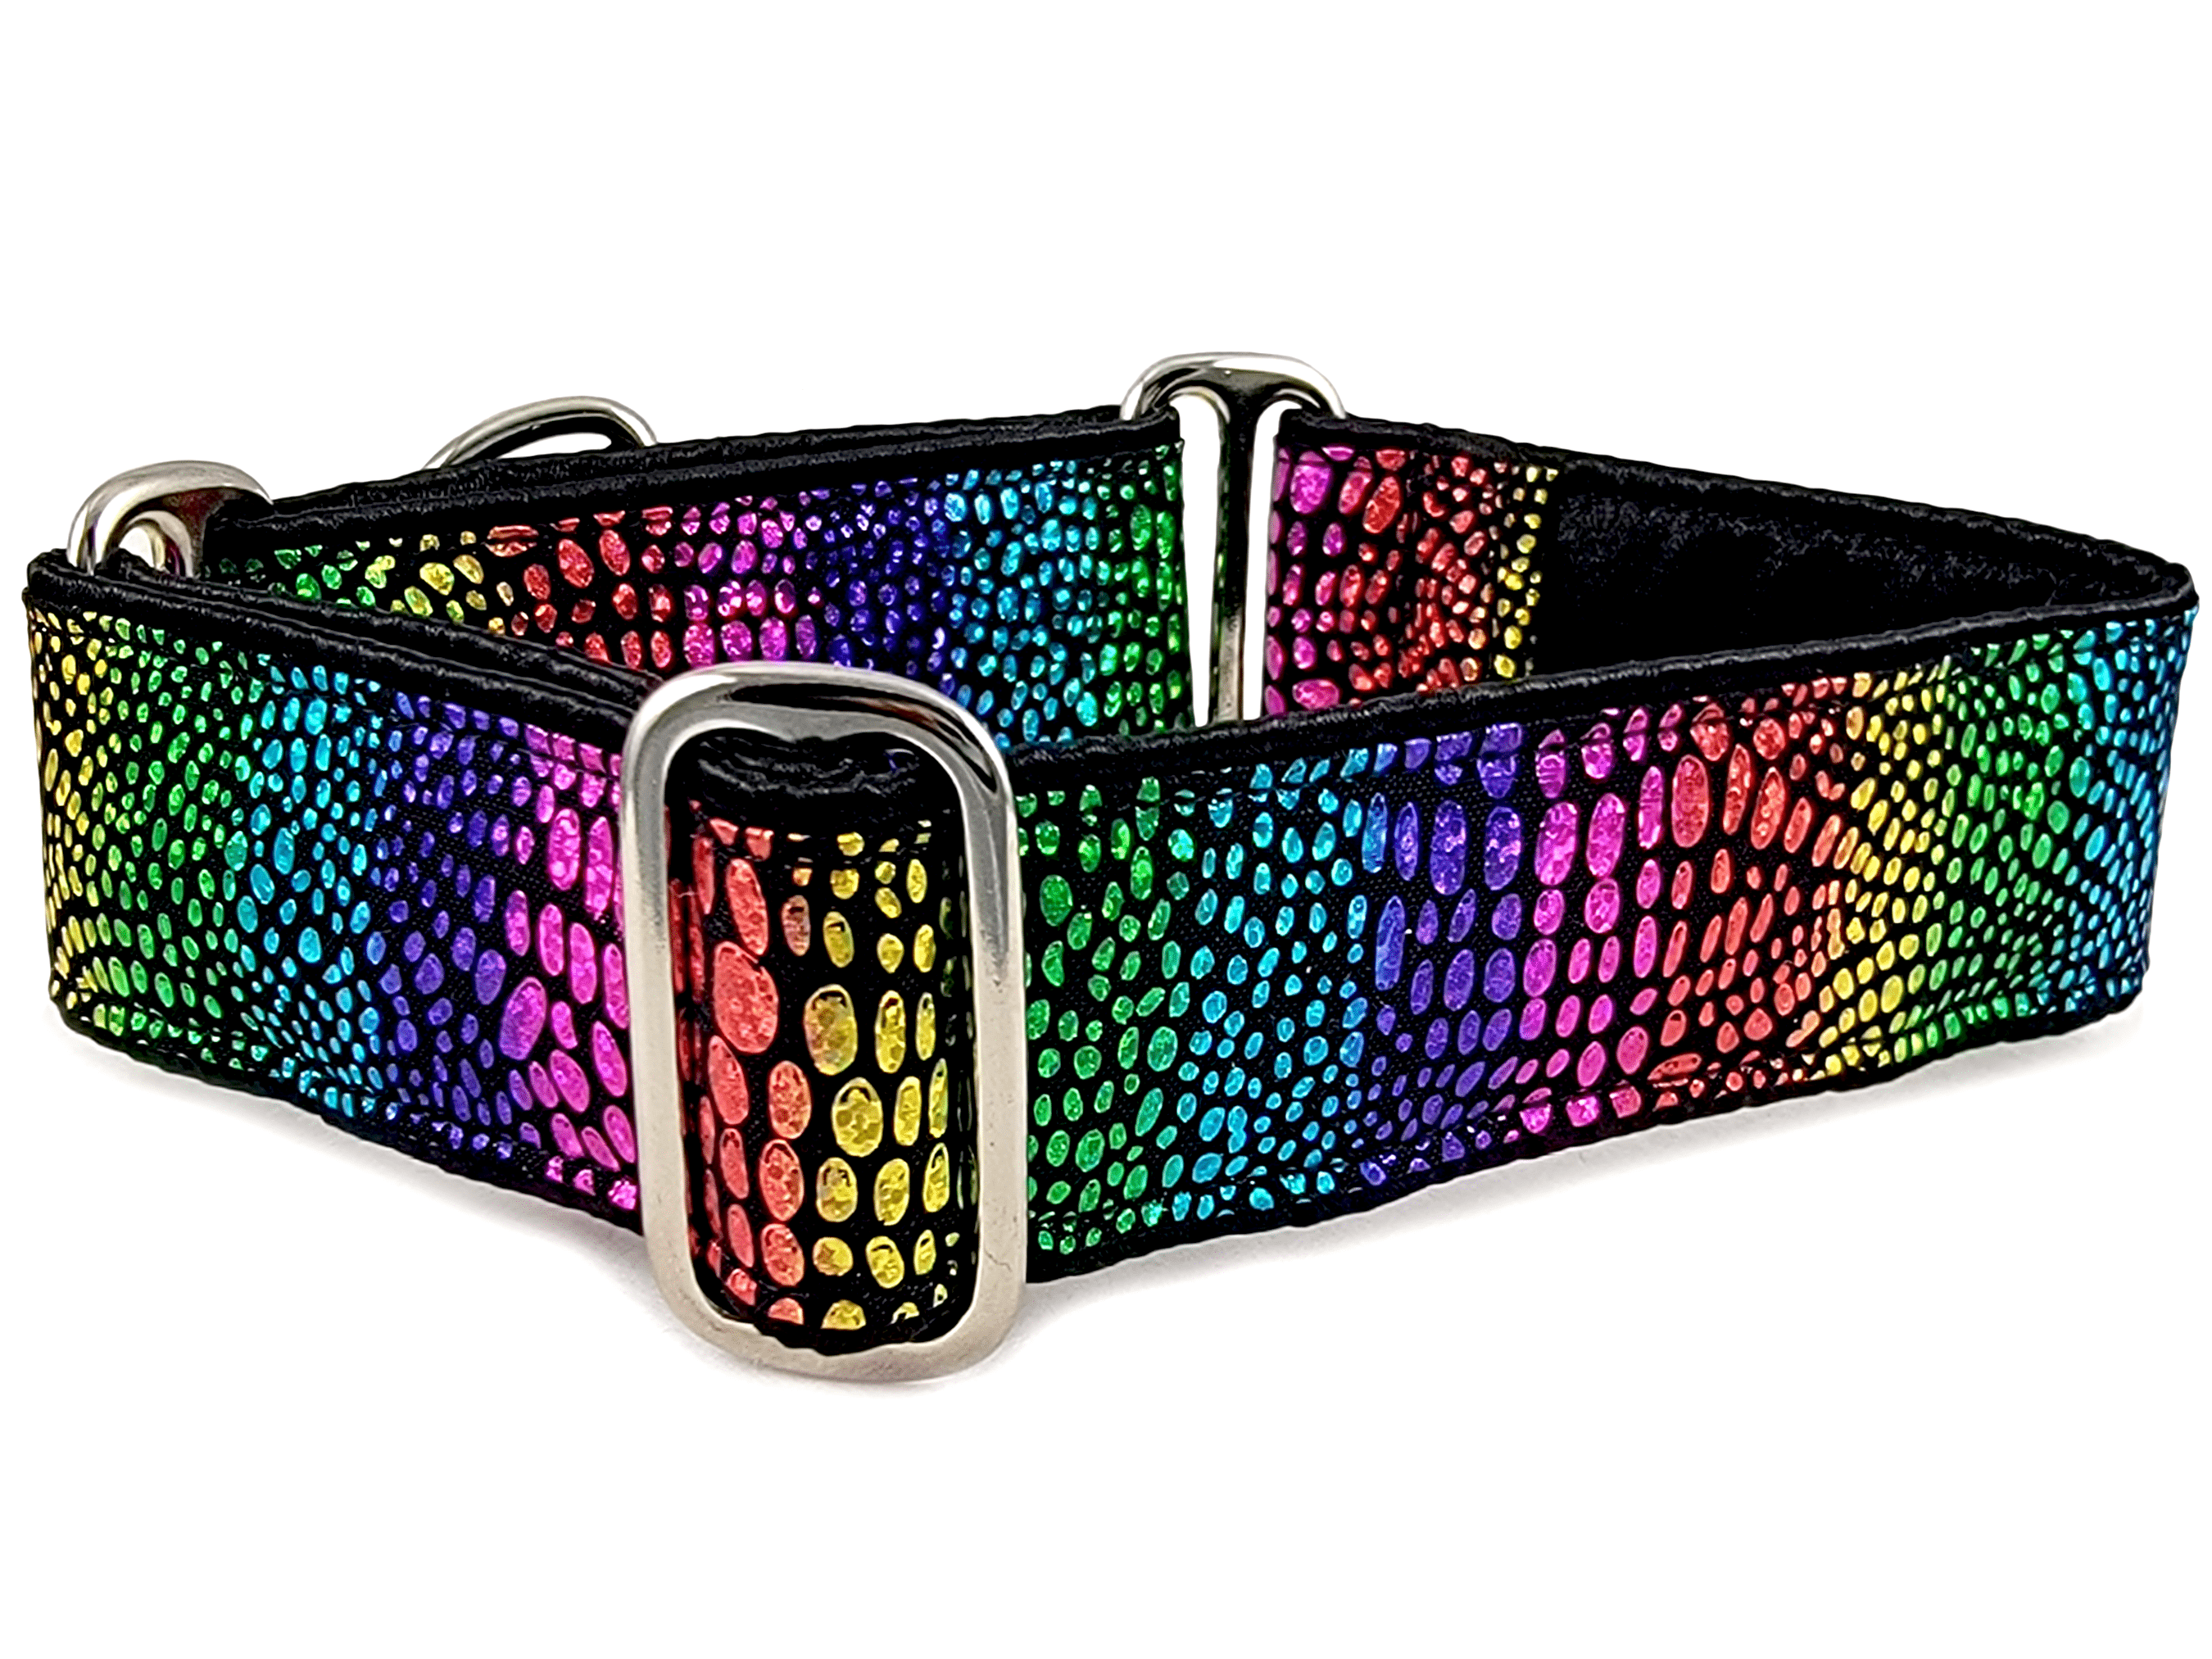 The Hound Haberdashery Collar Rainbow Sparkle - Martingale Dog Collar or Buckle Dog Collar - 1.5" Width